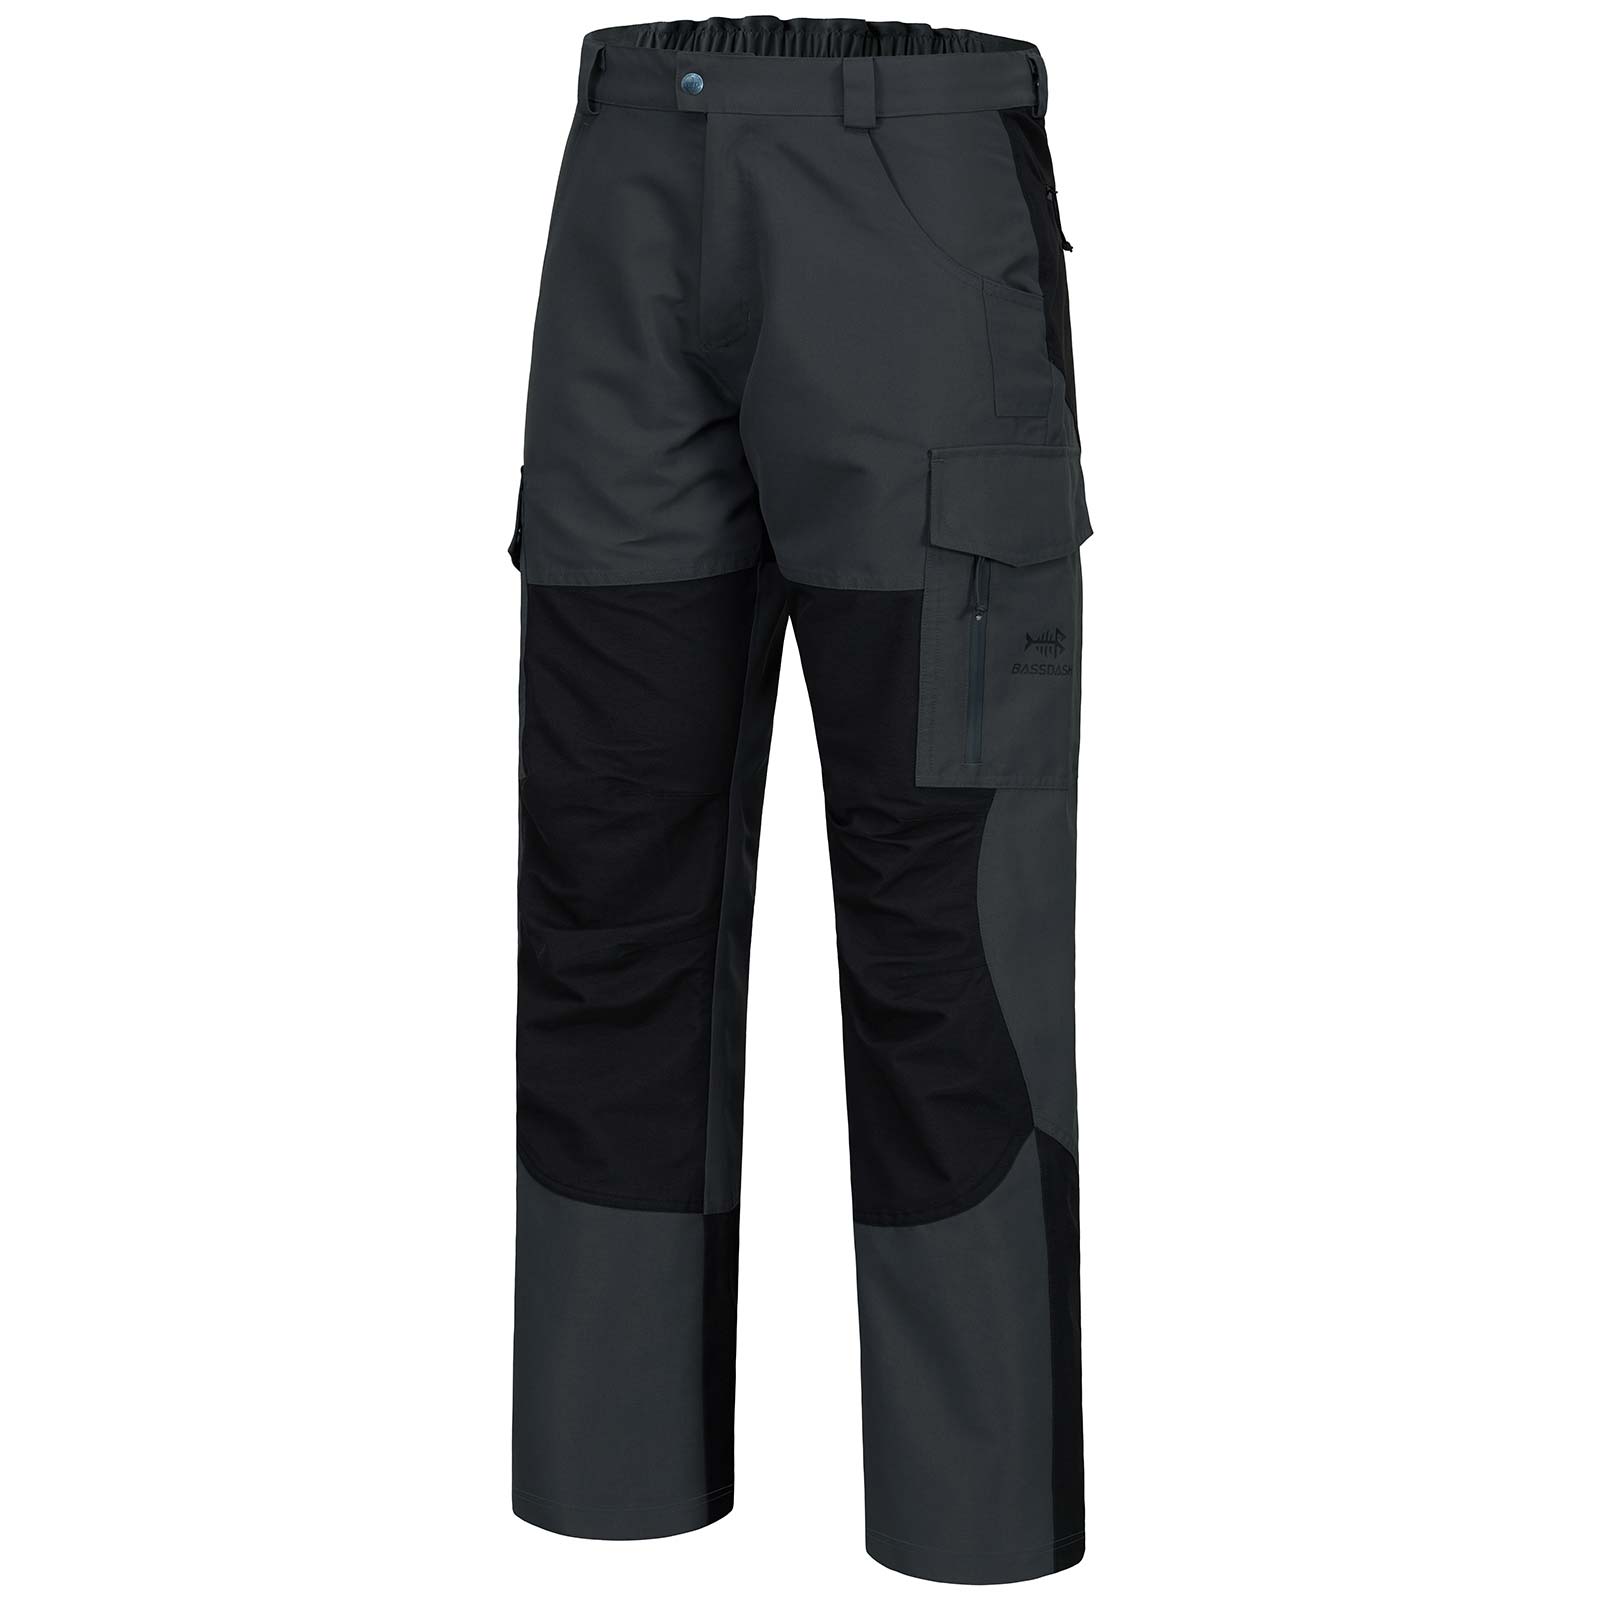 Men’s Splice Waterproof Breathable Pants - Dark Grey/Black / 35W x 32L